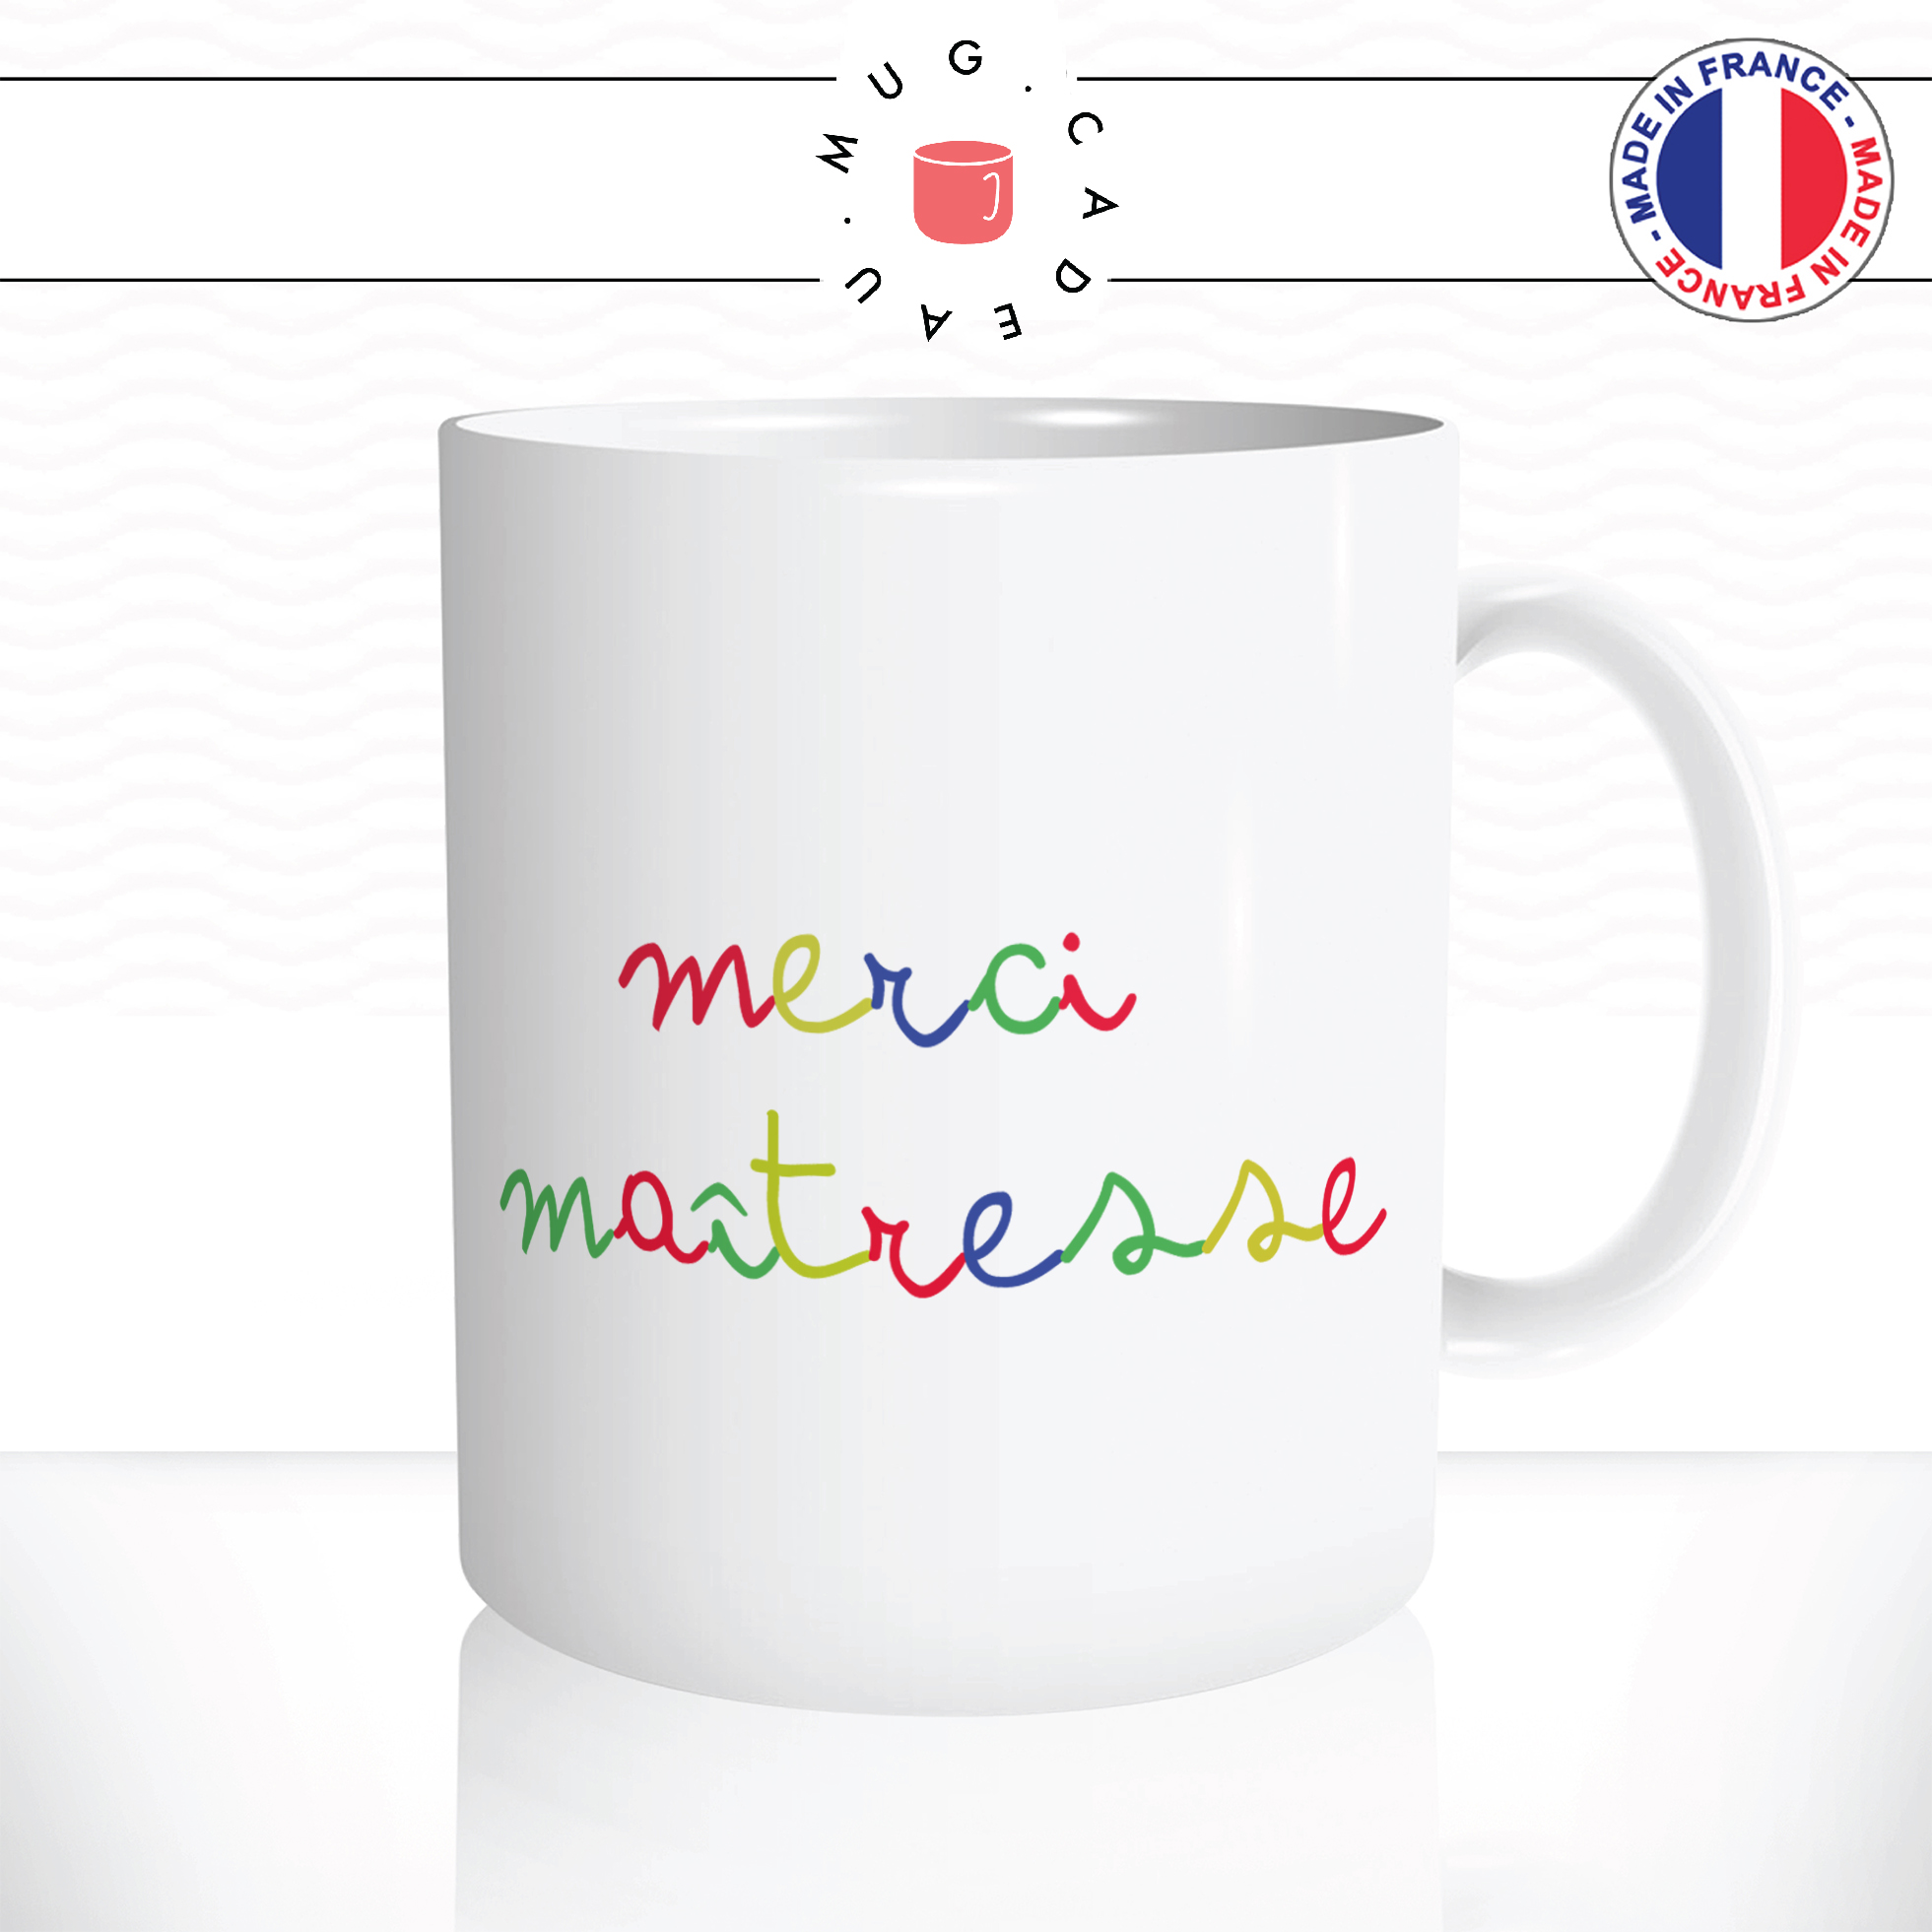 mug-tasse-ref4-fin-annee-scolaire-merci-maitresse-couleurs-cafe-the-mugs-tasses-personnalise-anse-droite